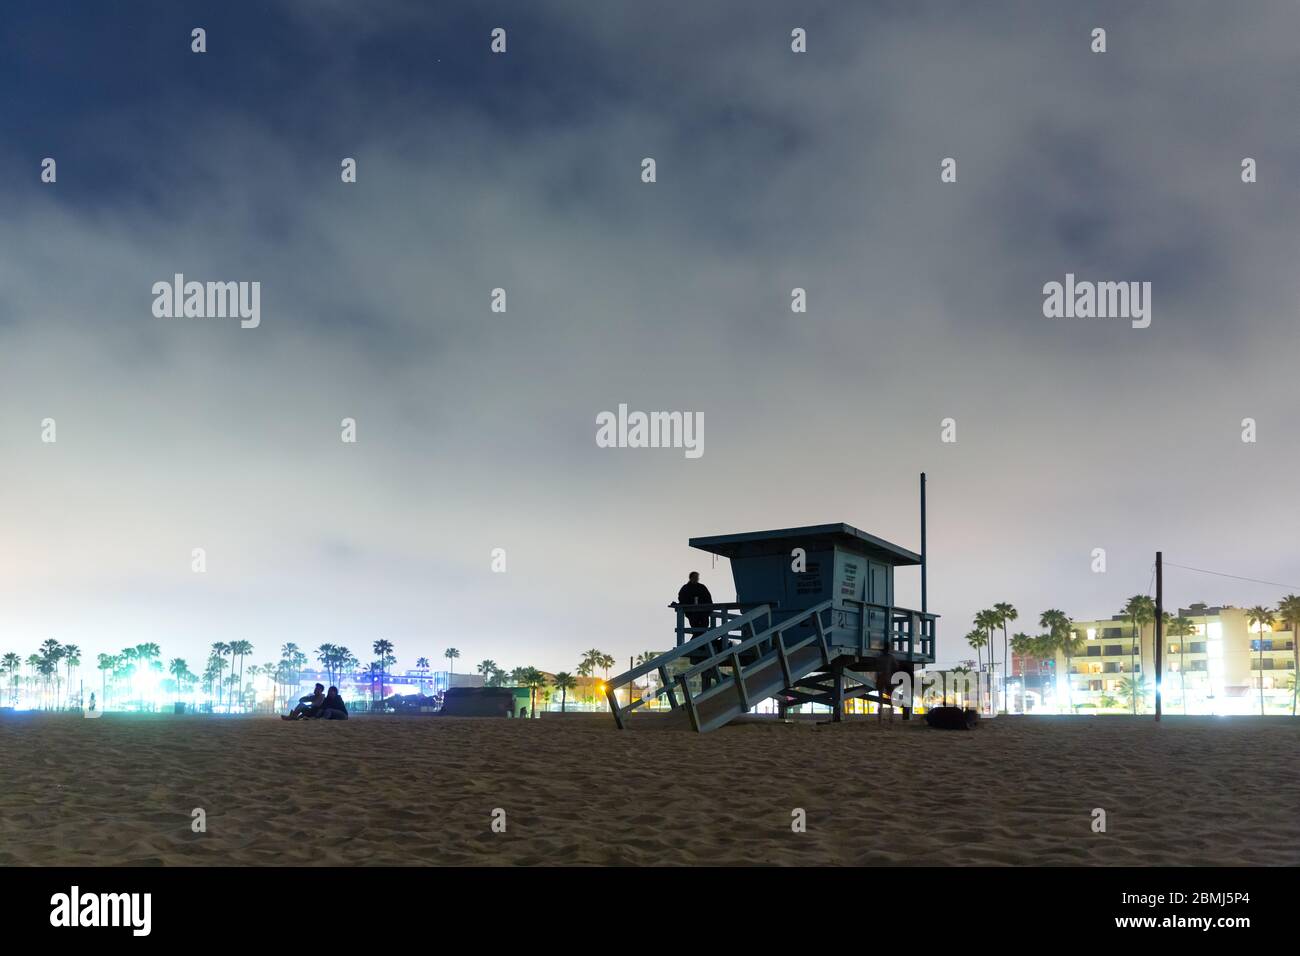 People enjoying the beach at night in Venice Beach, Los Angeles, California, USA Stock Photo